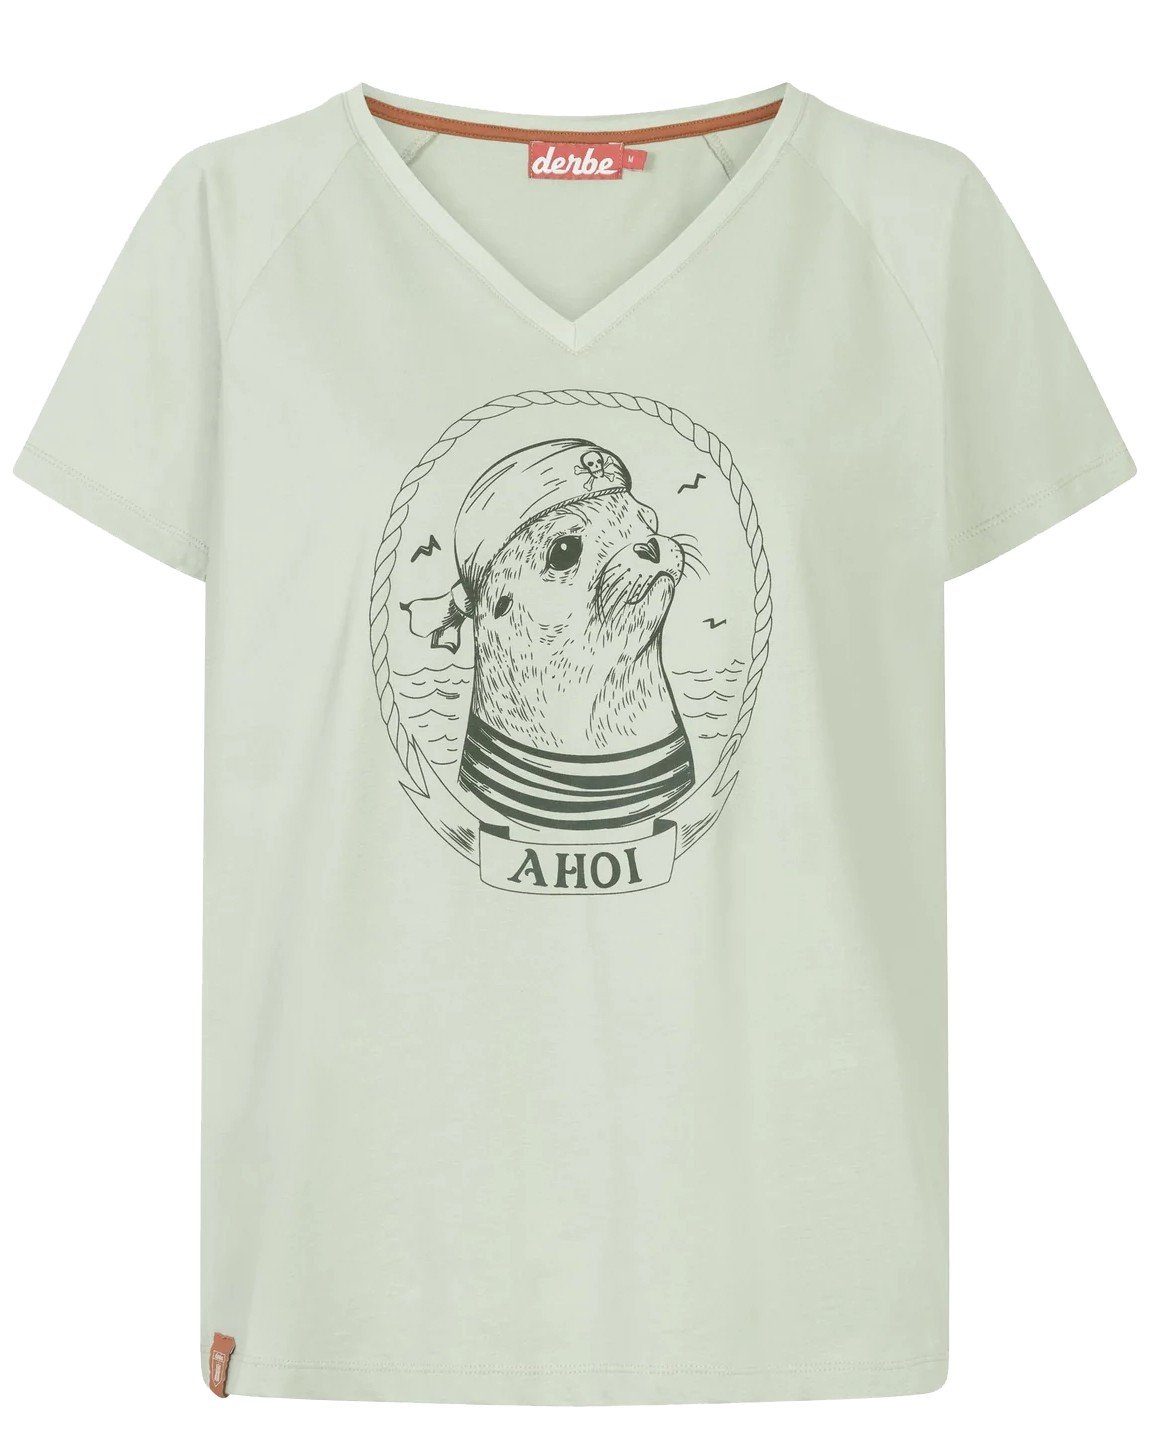 Derbe T-Shirt Matrosenrobbe Made / Portugal, in Baumwolle, Engel Blauer Knopf Grüner